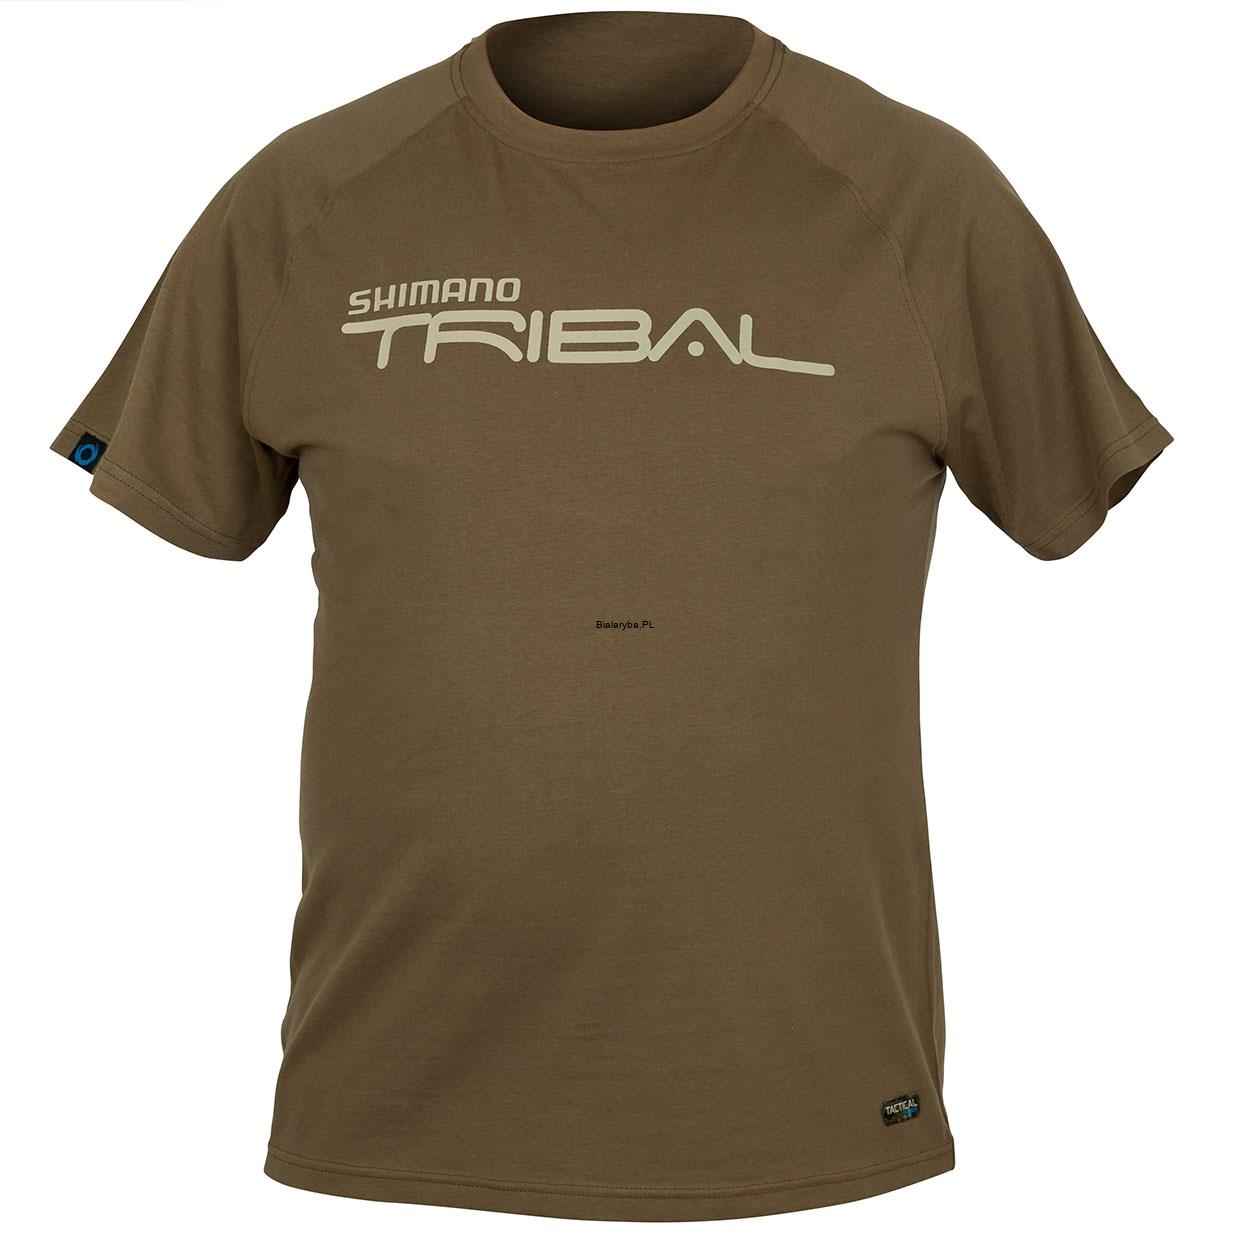 Koszulka Shimano T-Shirt Tribal Tactical XL oliwka, SHTTW16XL, 8717009857918